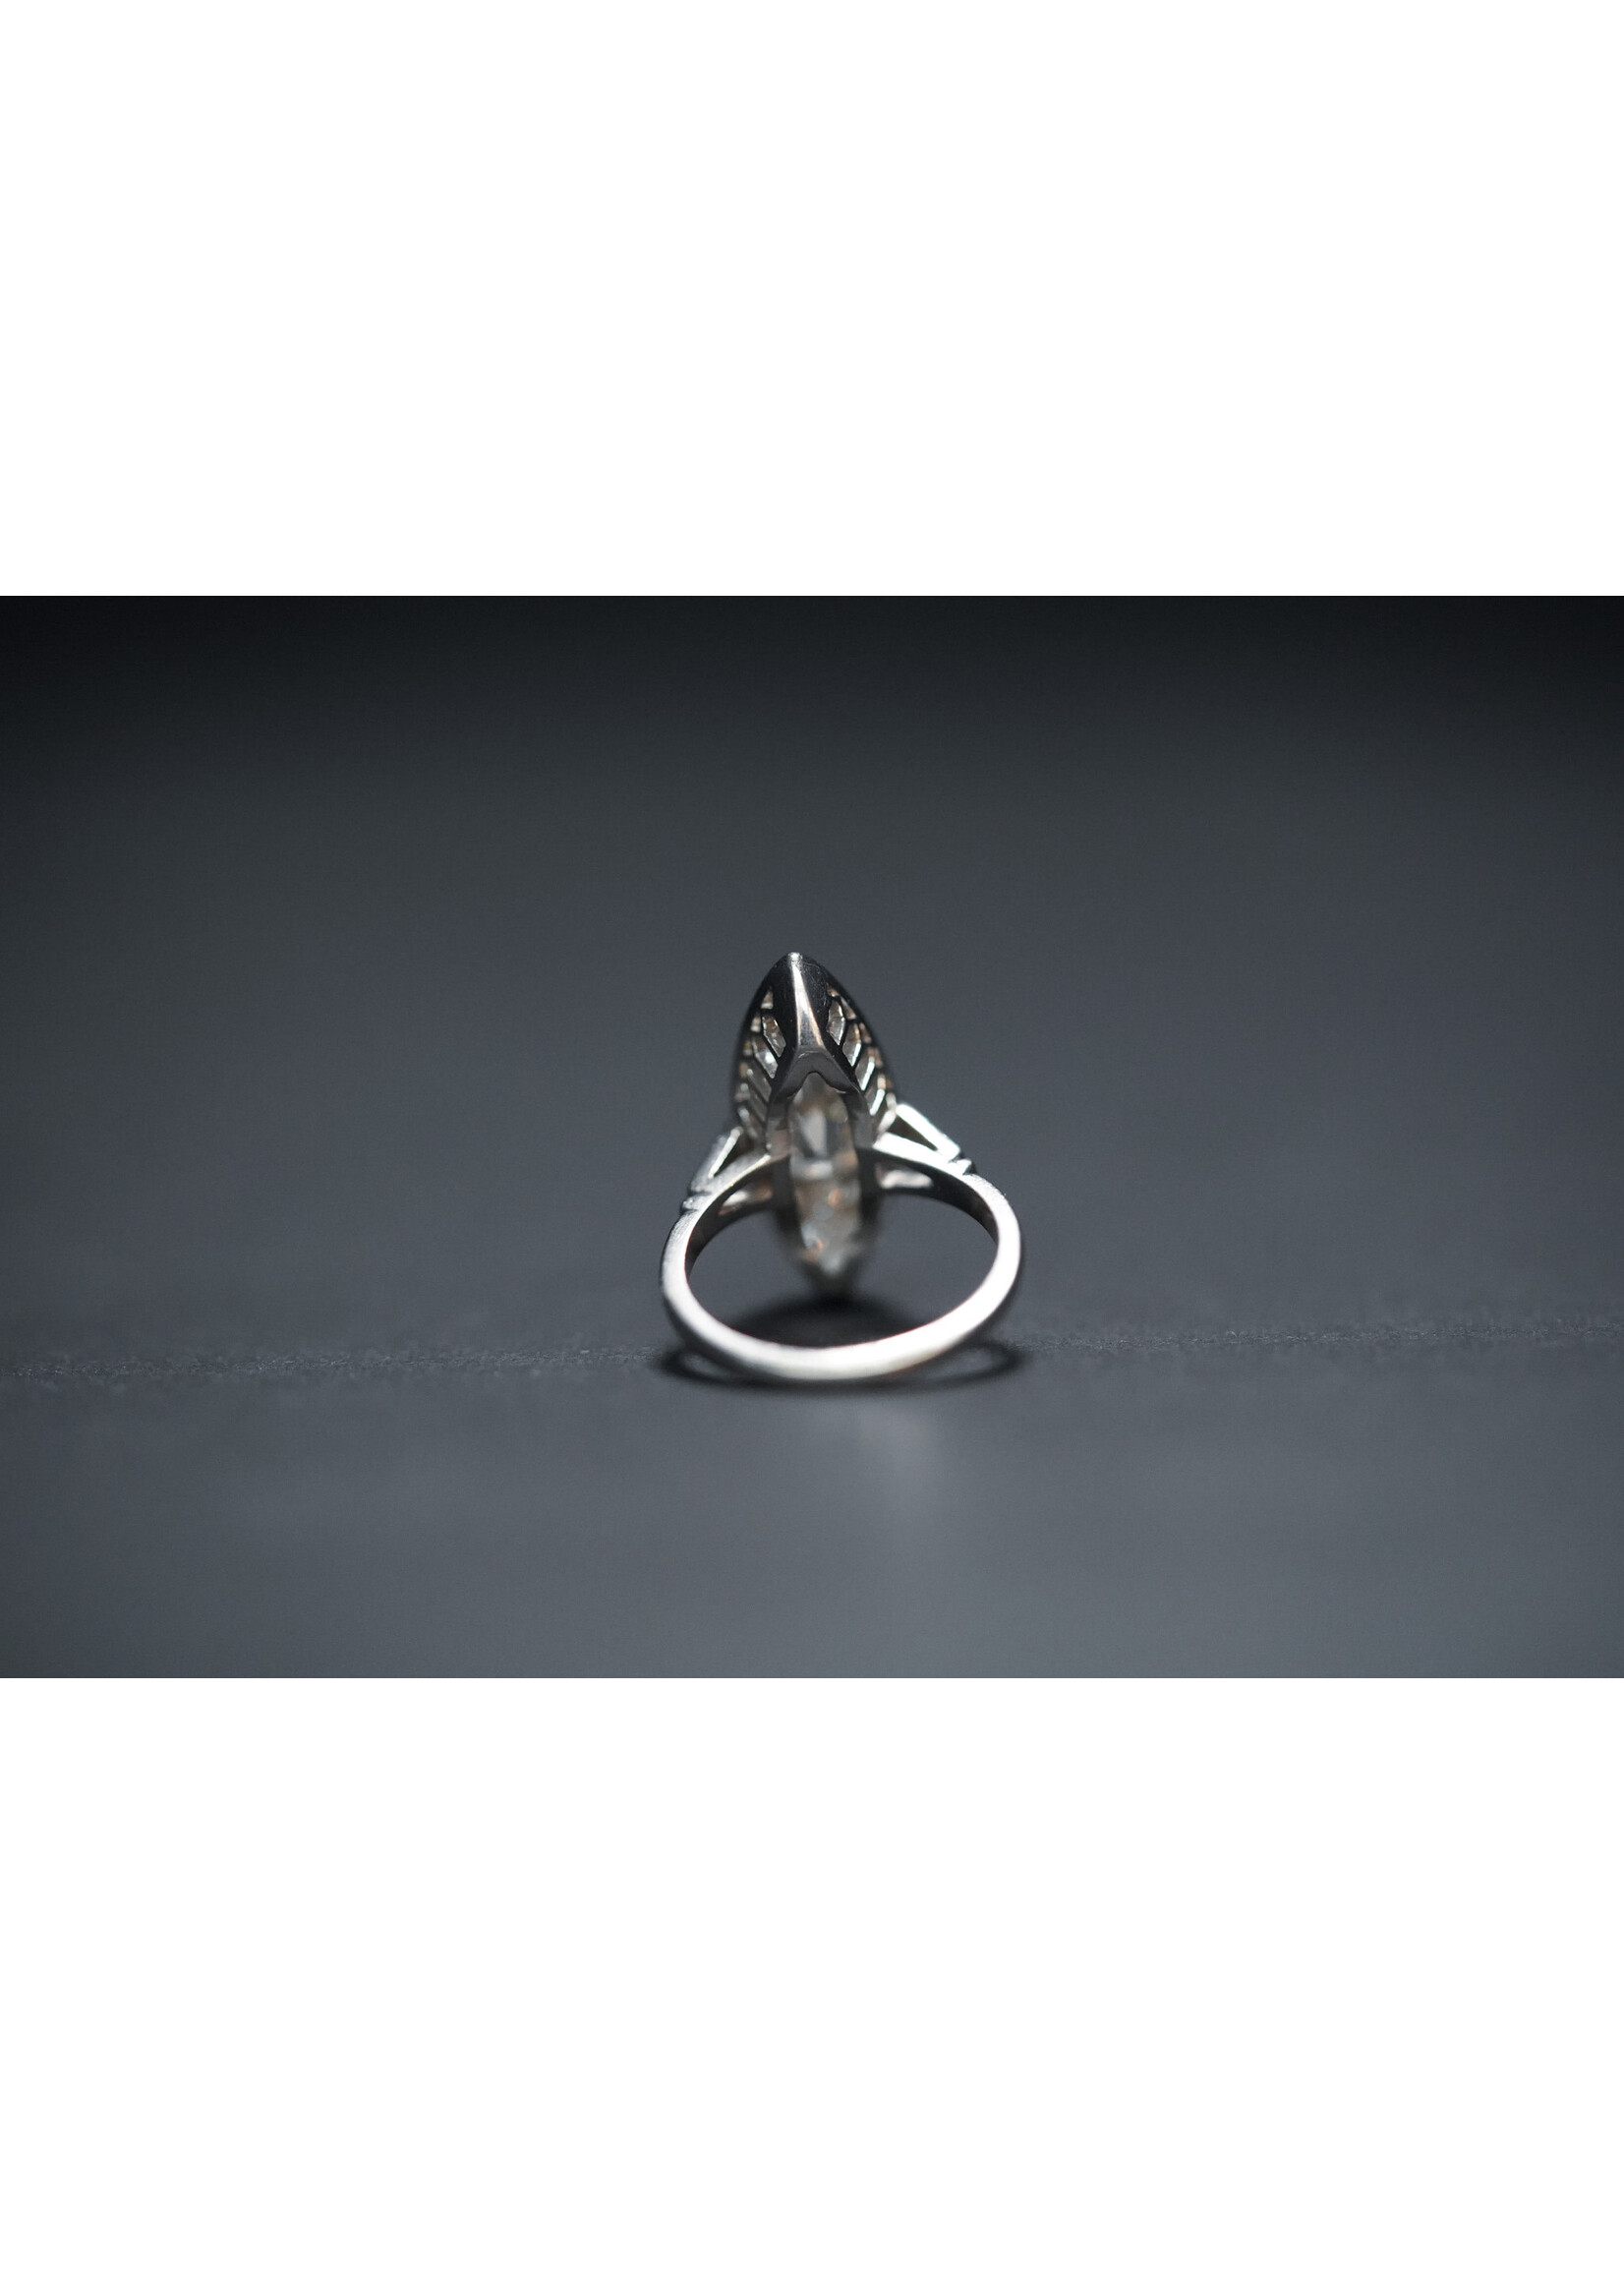 Platinum 6.05g 2.88ctw (2.07ctr) L/VS2 GIA European Cut Diamond Vintage Ring (size 5.75)